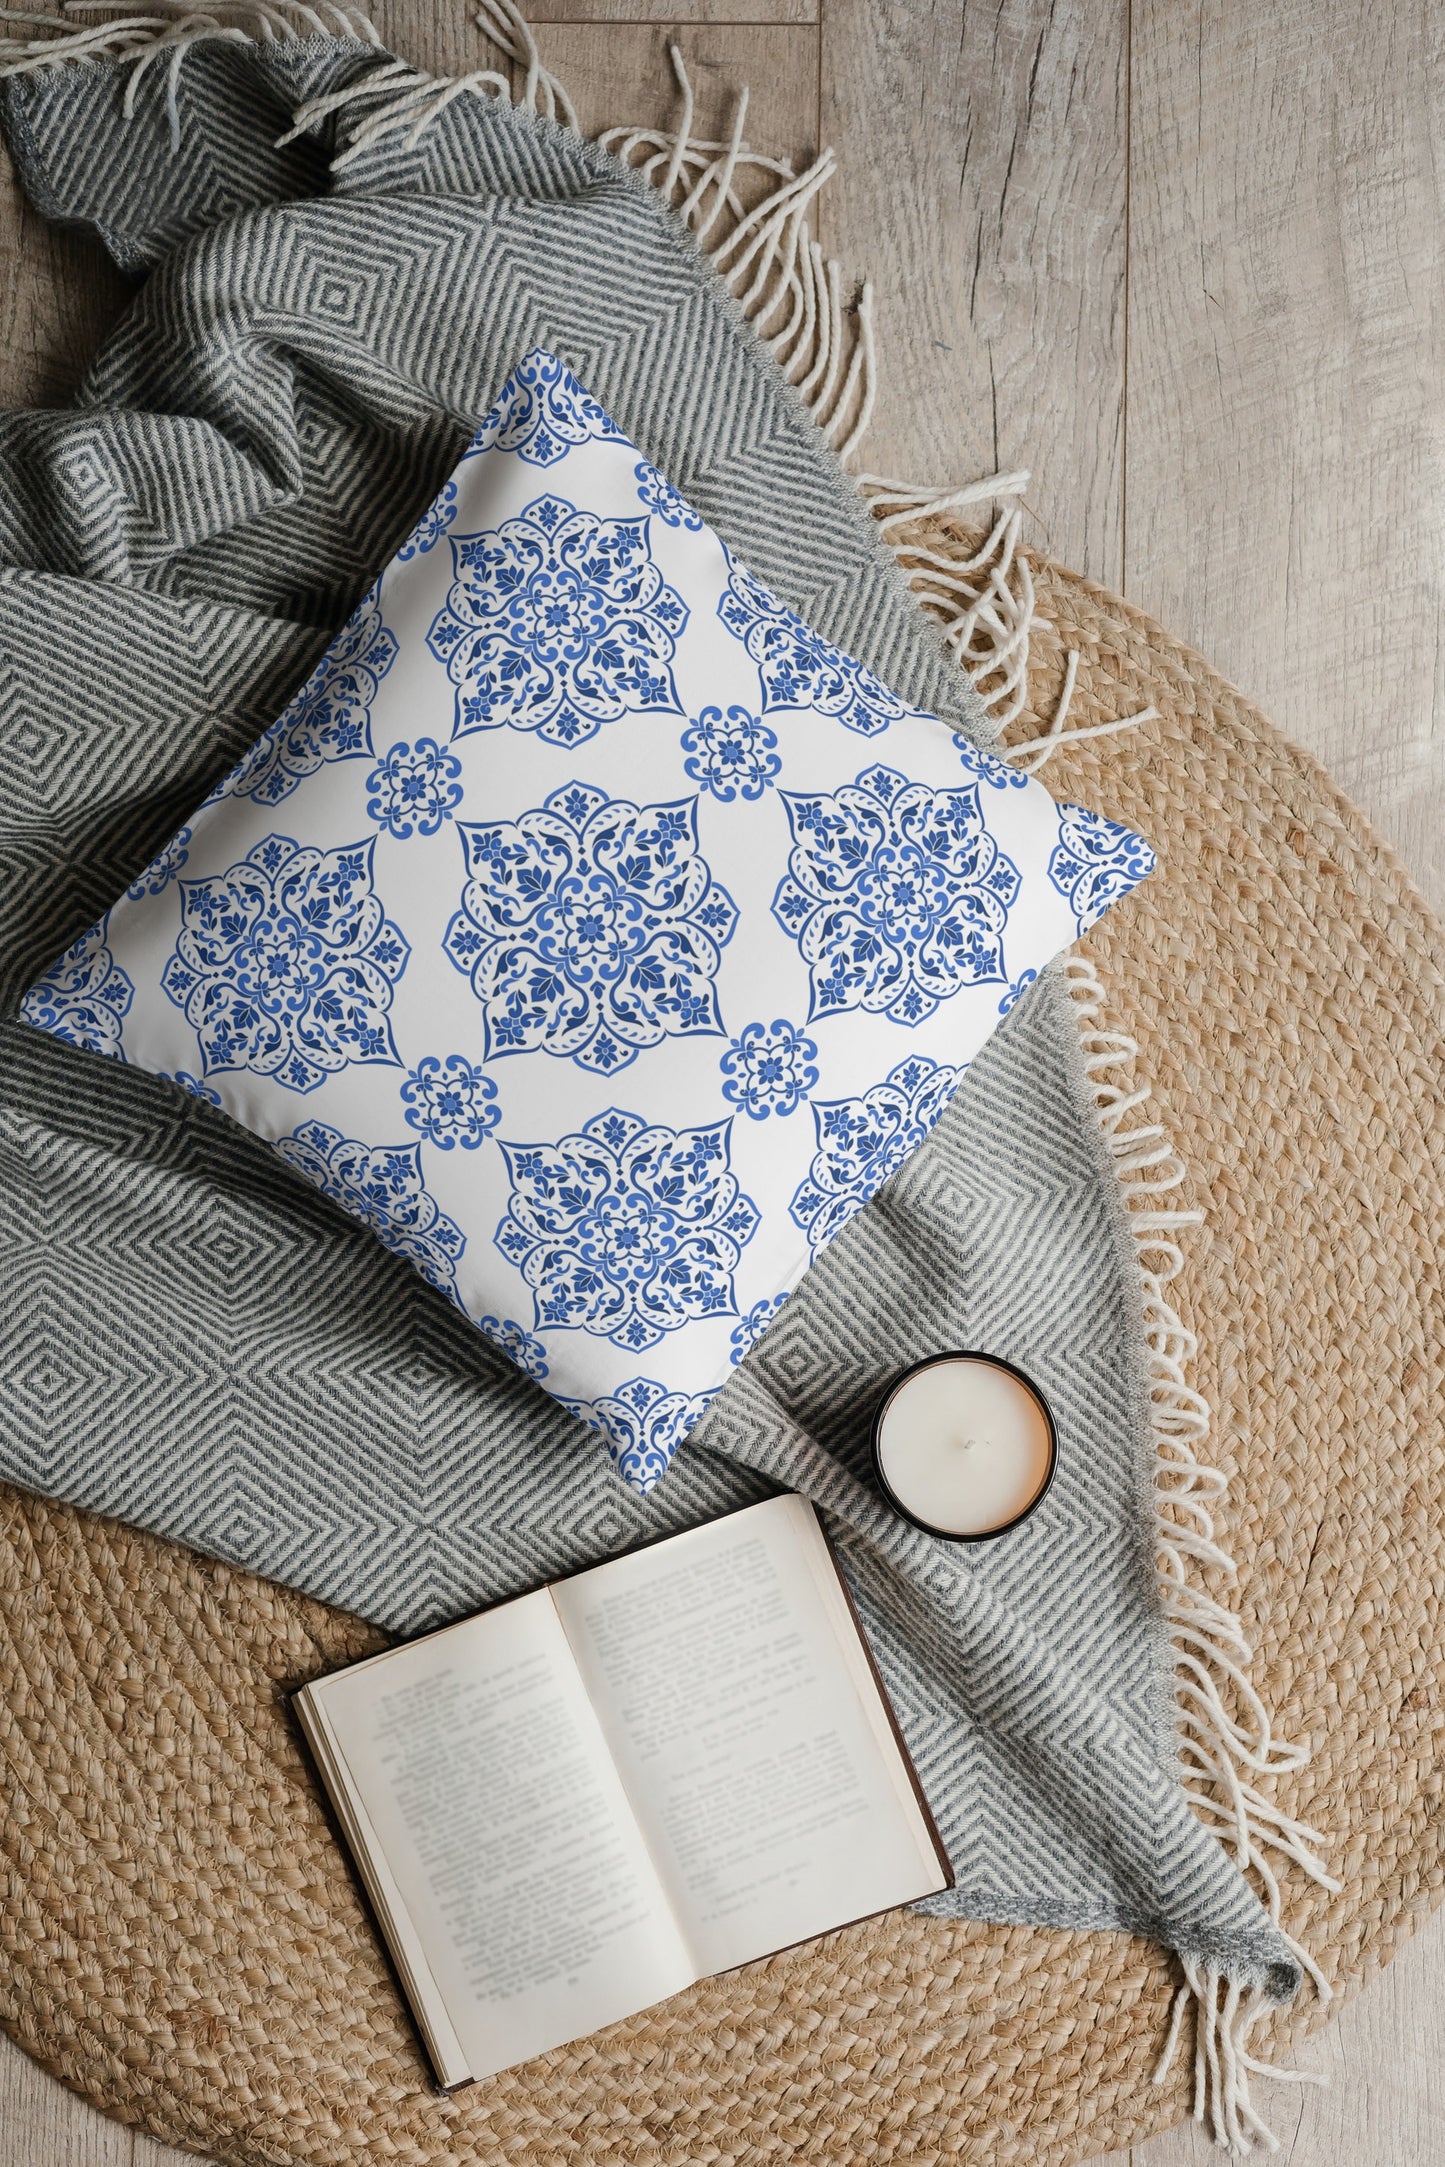 Bordeira Outdoor Pillows Blue & White